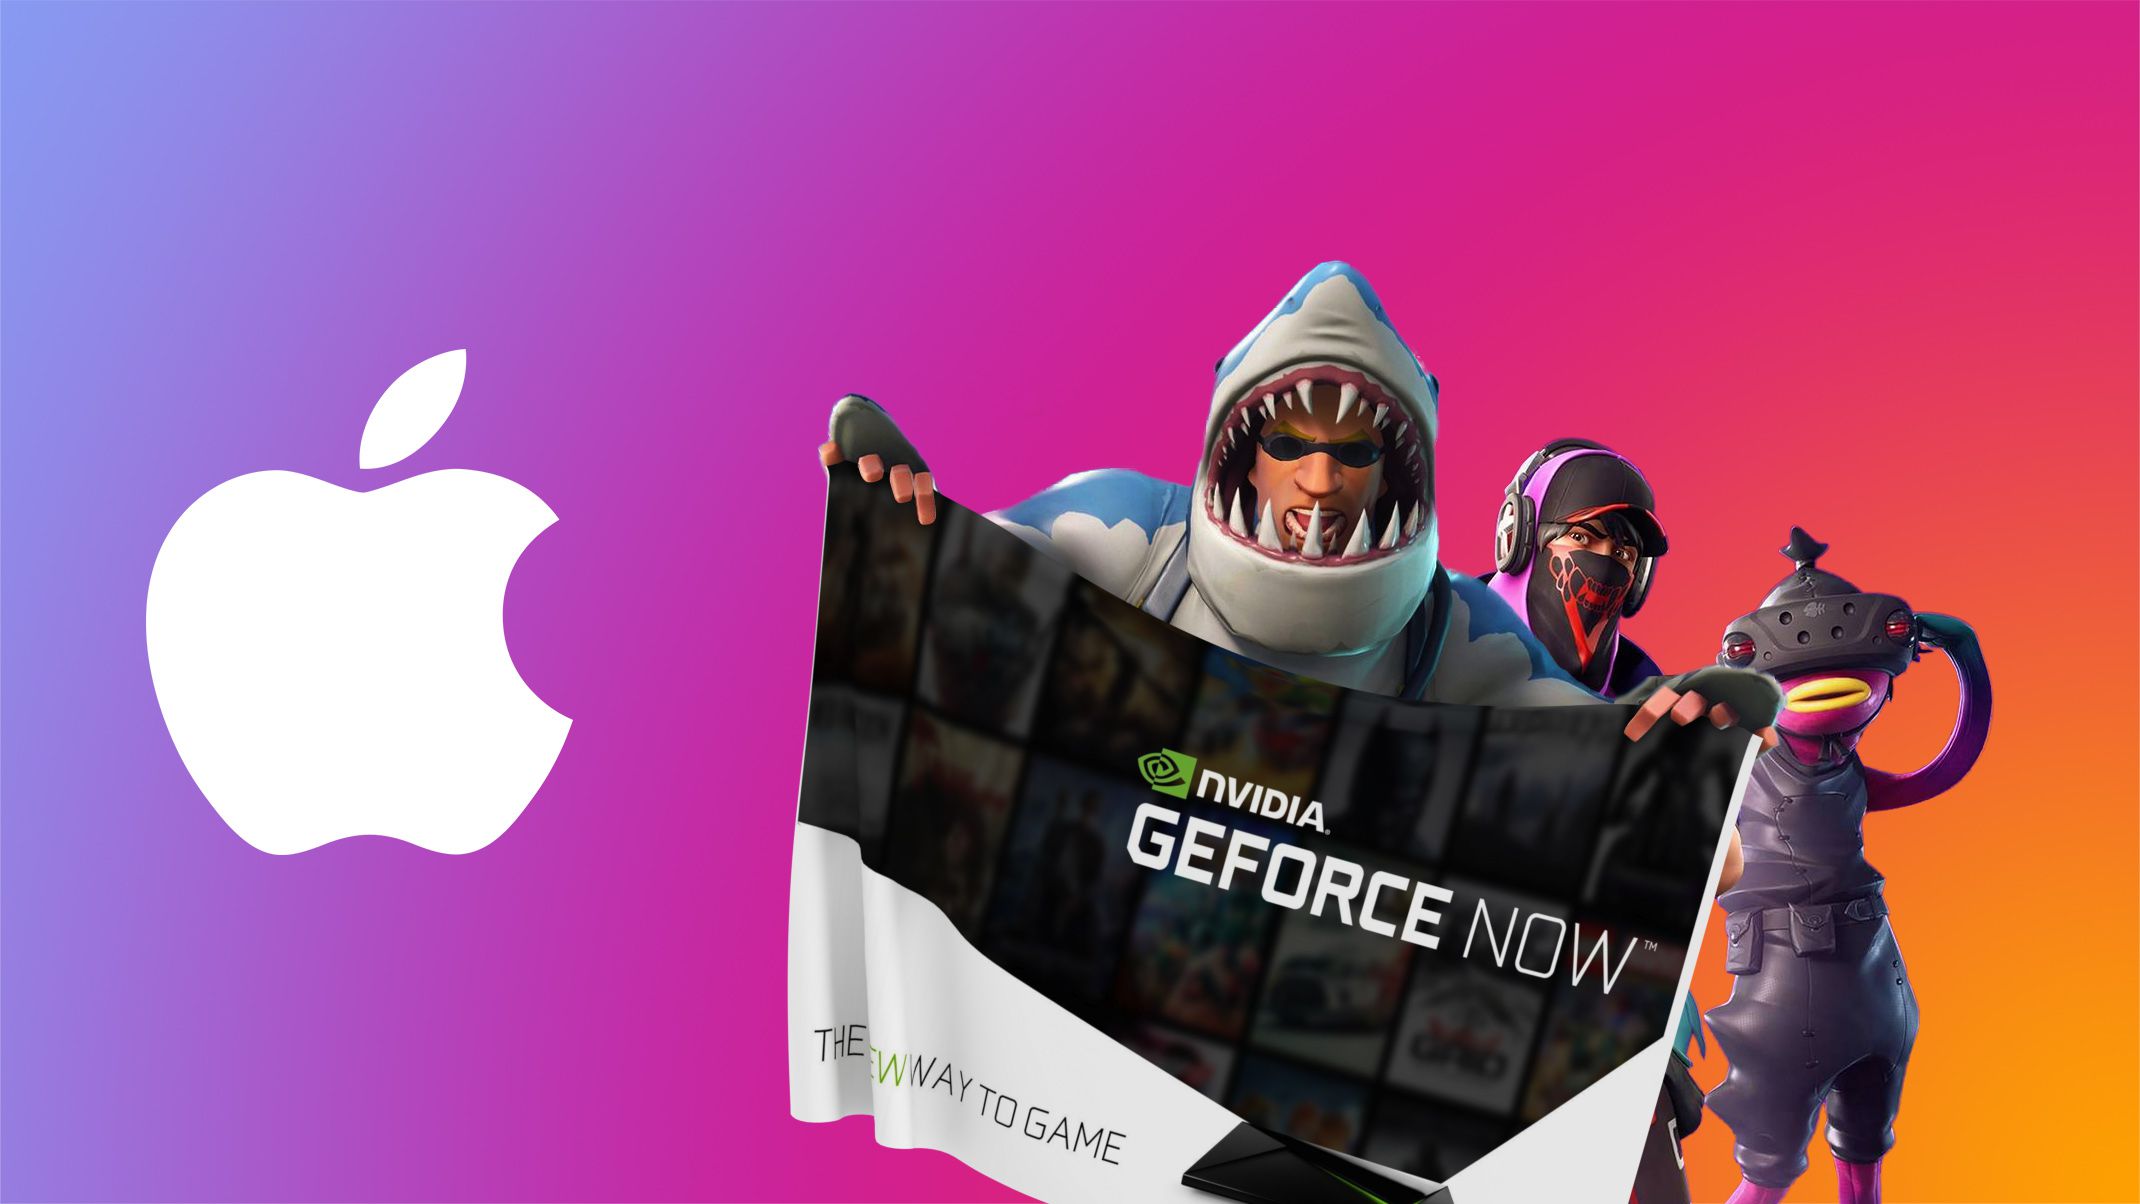 Fortnite to return to iOS via Nvidia's 'GeForce Now' cloud gaming